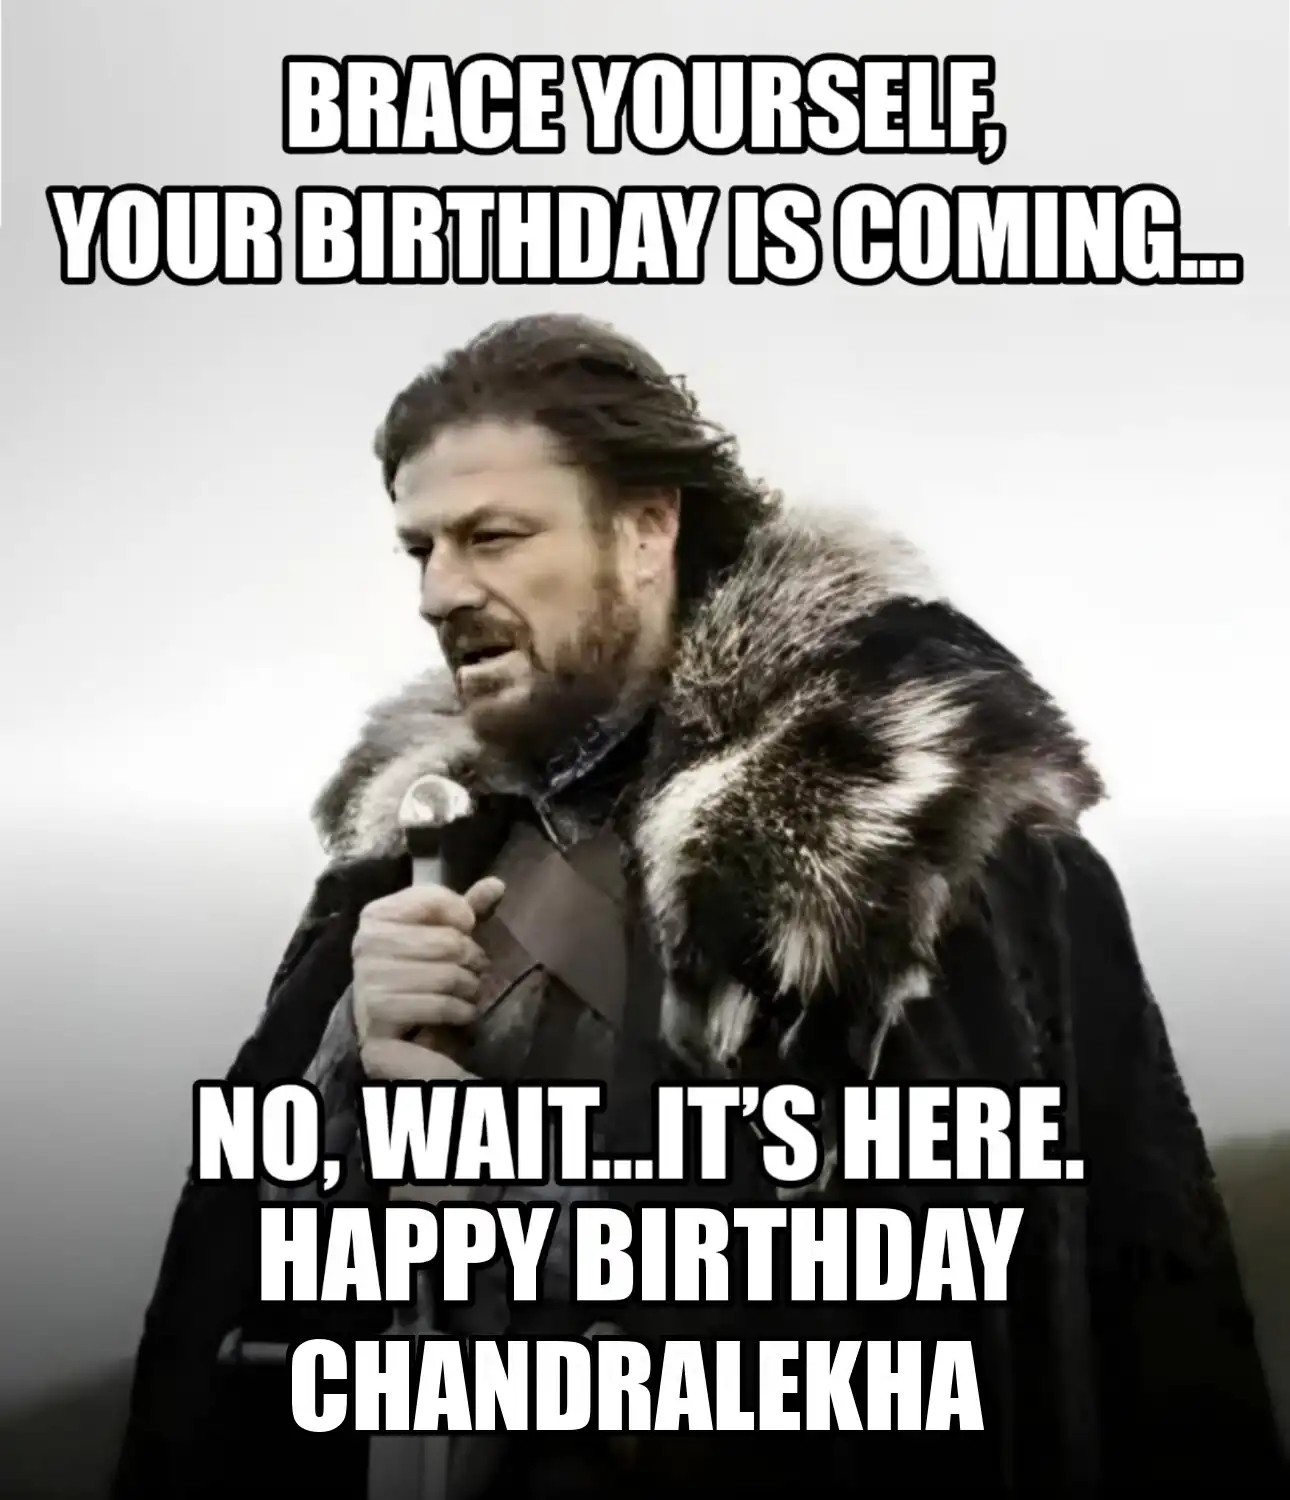 Happy Birthday Chandralekha Brace Yourself Your Birthday Is Coming Meme